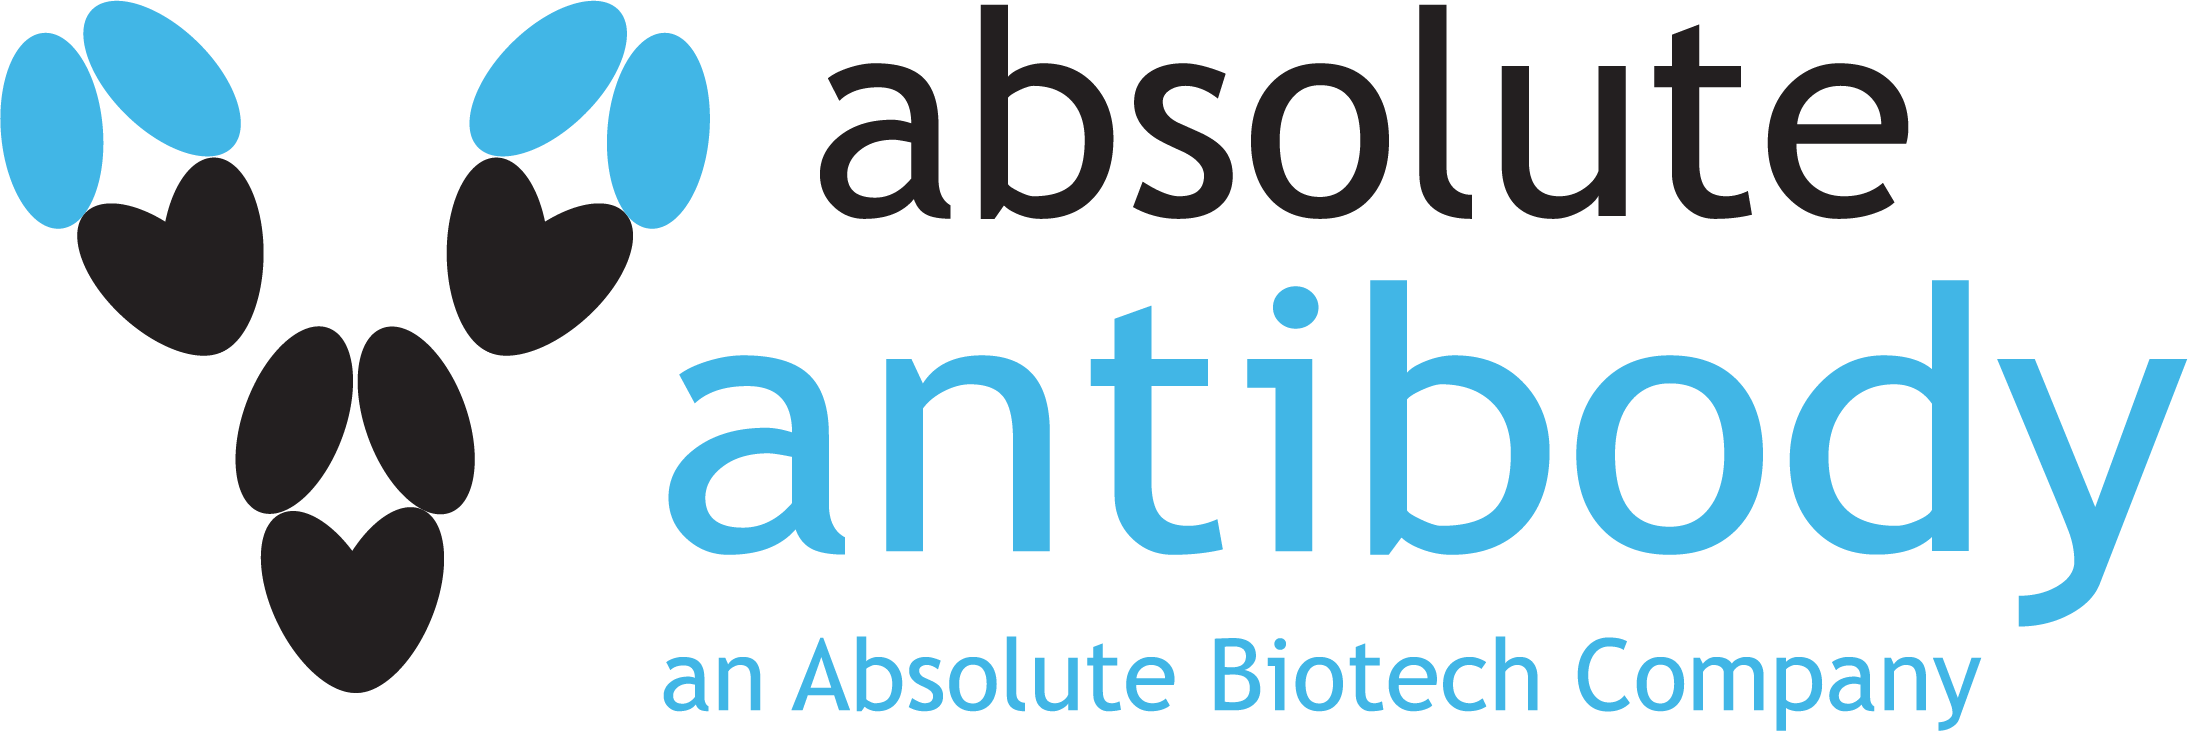 Absolute Antibody: ABYNTEK BIOPHARMA DISTRIBUIDOR DE ABSOLUTE ANTIBODY EN ESPAÑA Y PORTUGAL